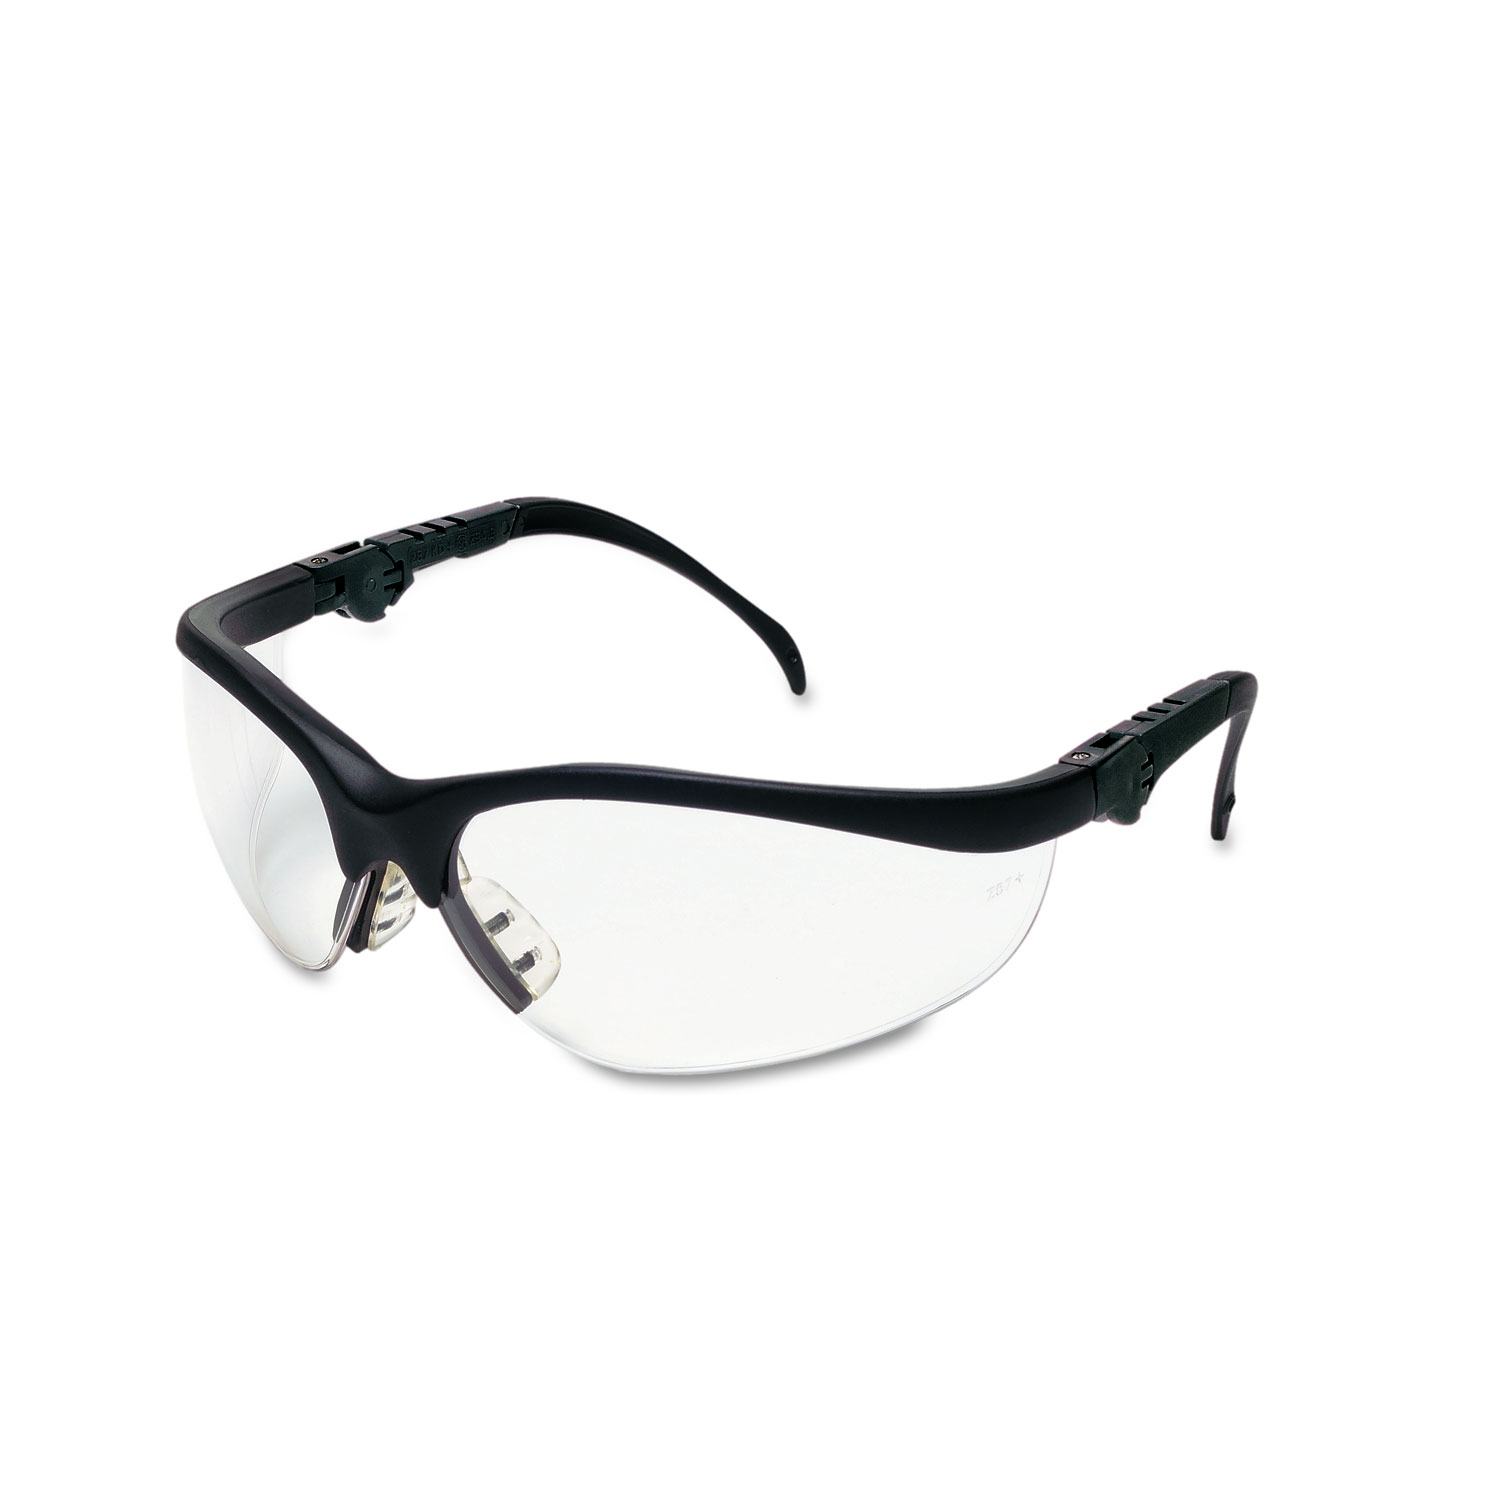  MCR Safety KD310 Klondike Plus Safety Glasses, Black Frame, Clear Lens (CRWKD310) 